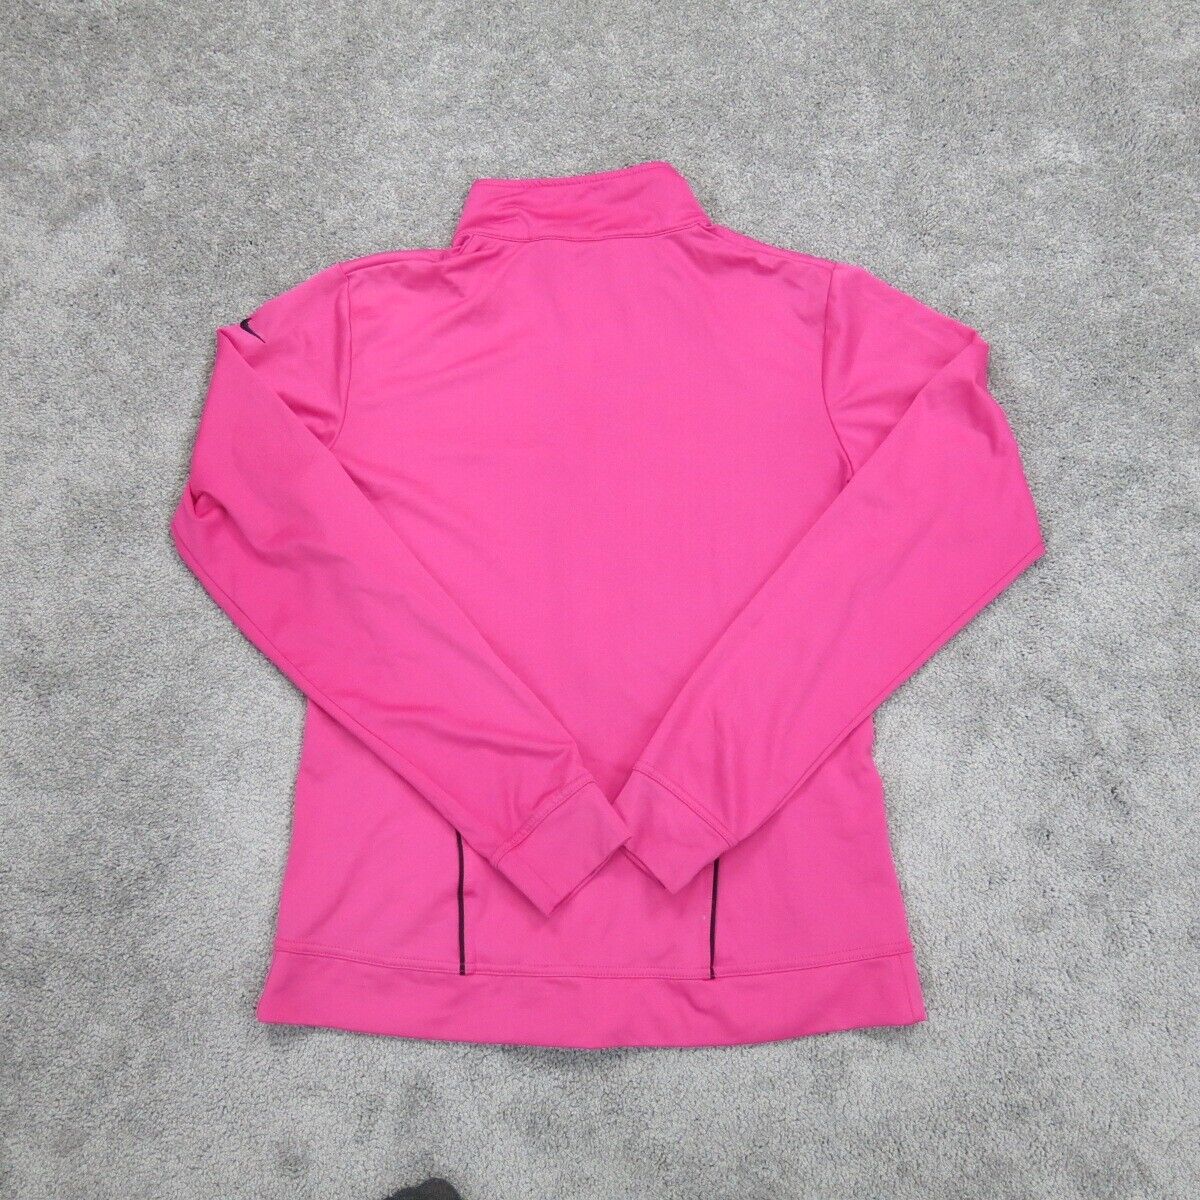 Nike Womens Full Zip Up Sweatshirt Pockets Raglan Long Sleeves Pink Size Medium